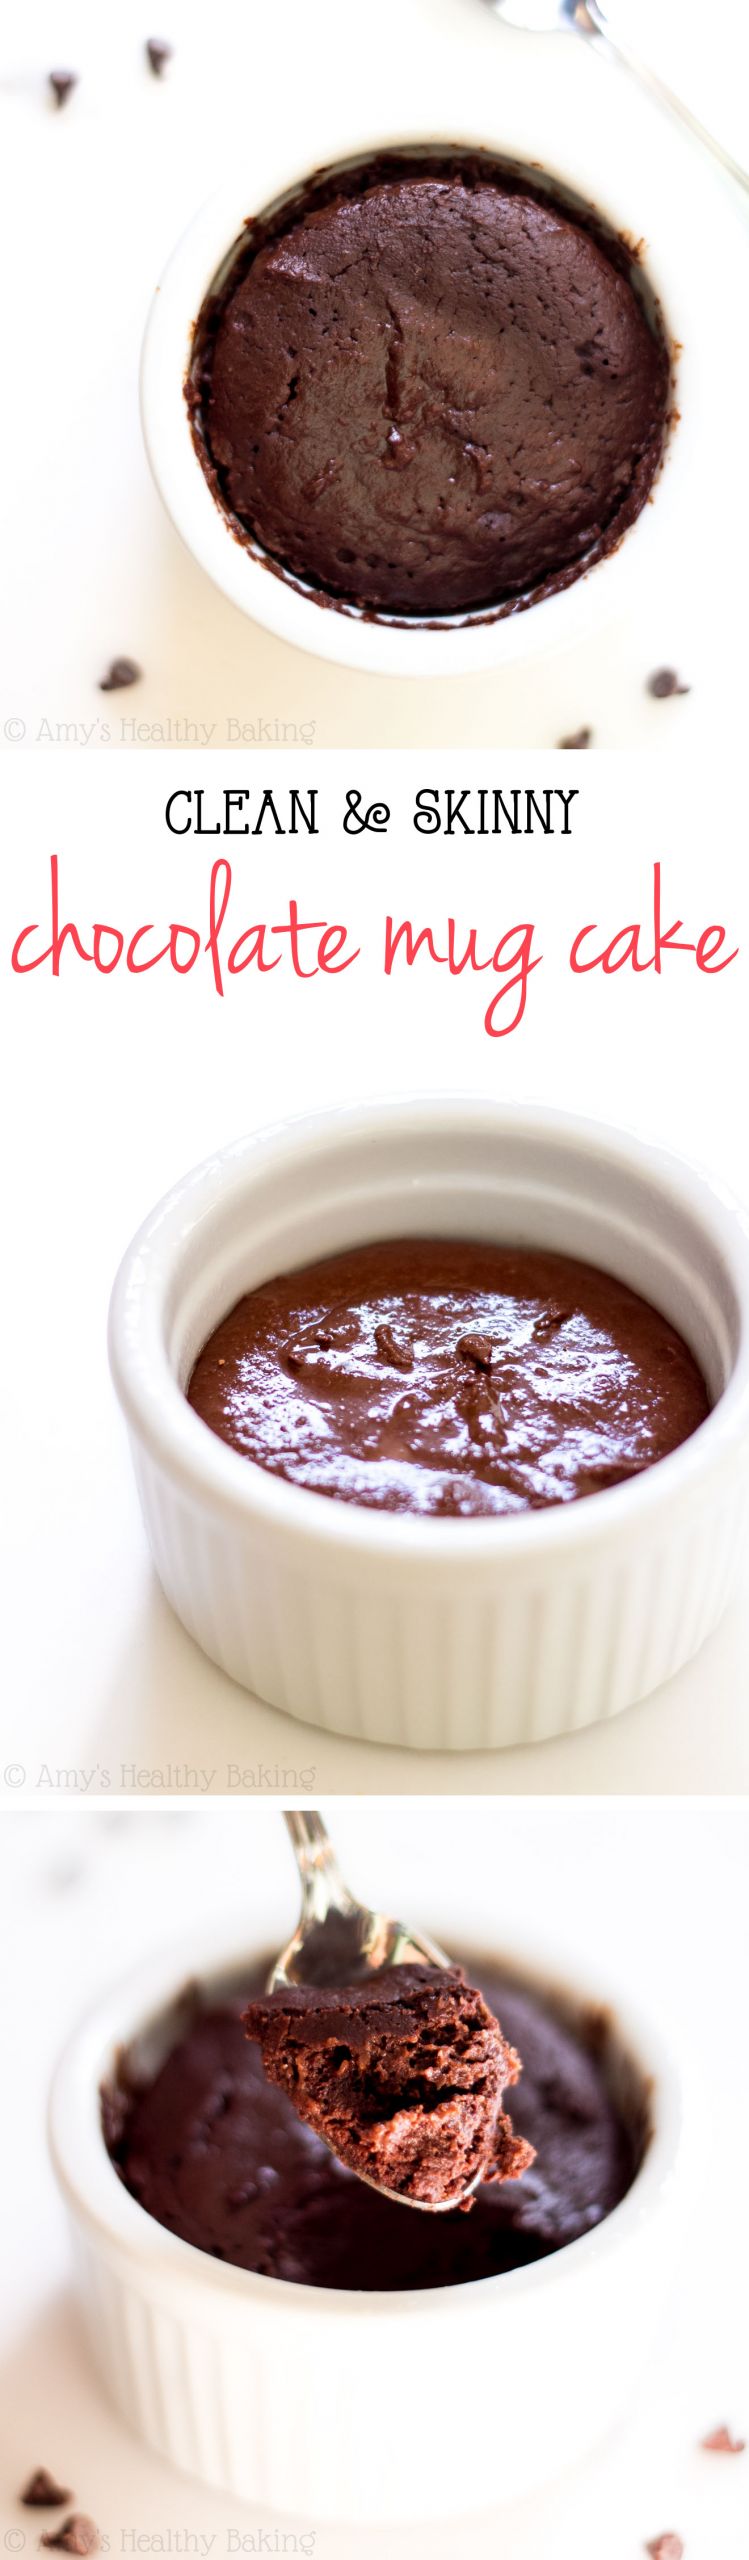 Low Calorie Mug Cake Recipes
 Single Serving Clean Chocolate Mug Cake Recipe Video